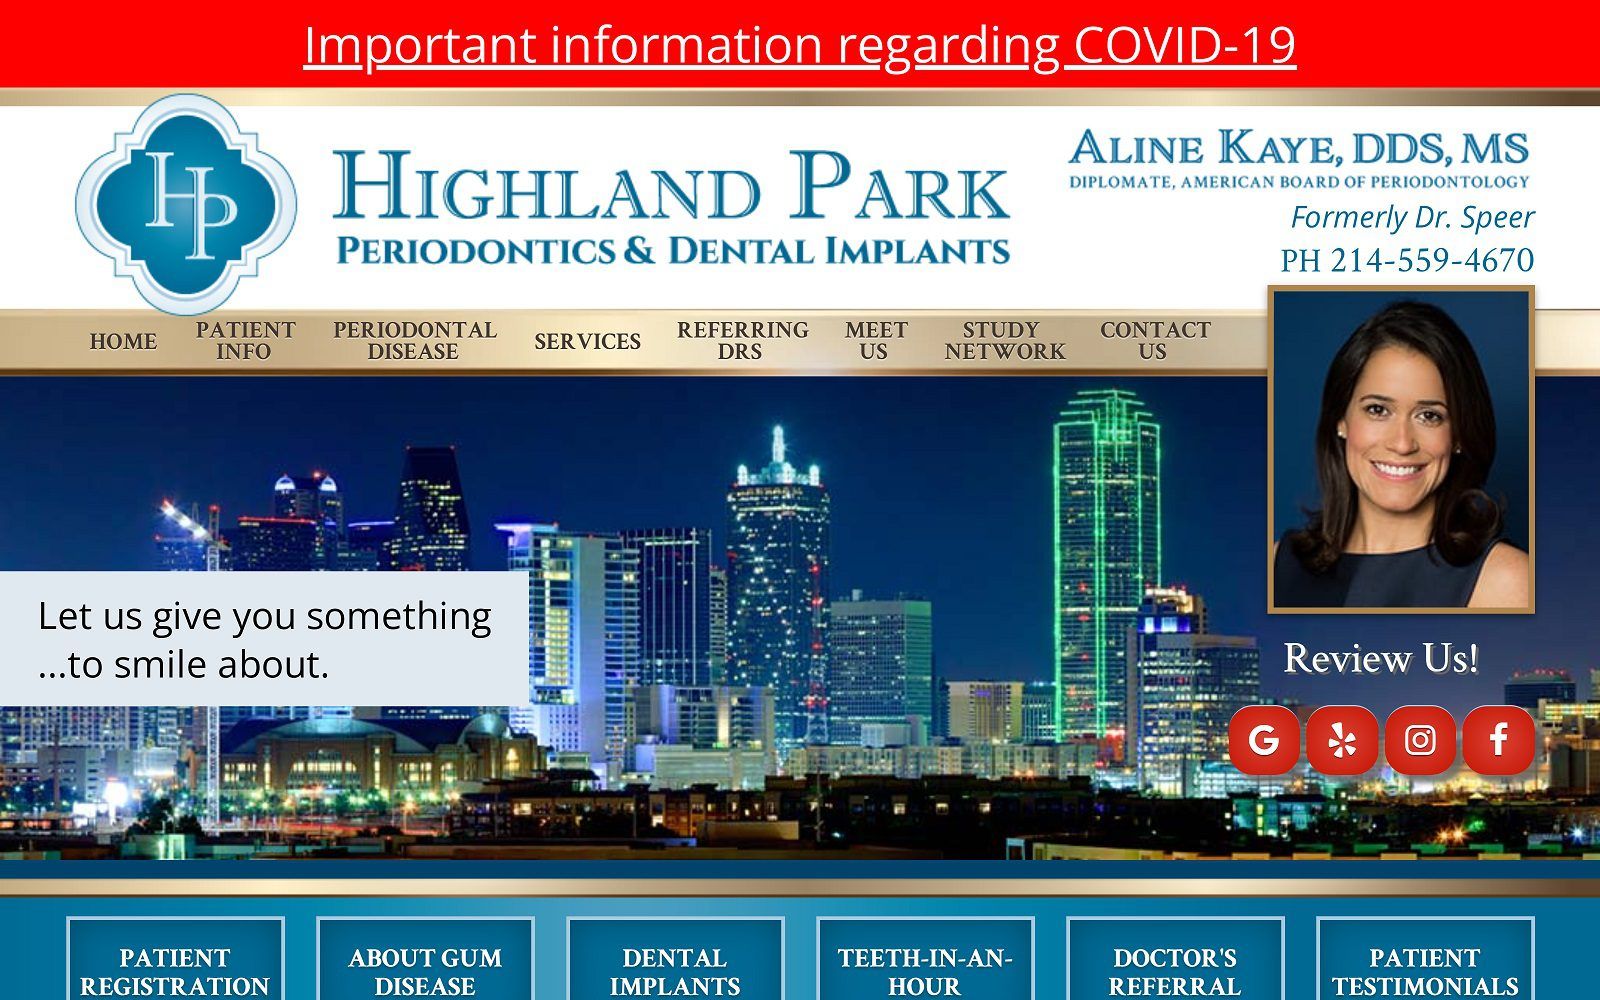 The screenshot of highland park periodontics & dental implants website